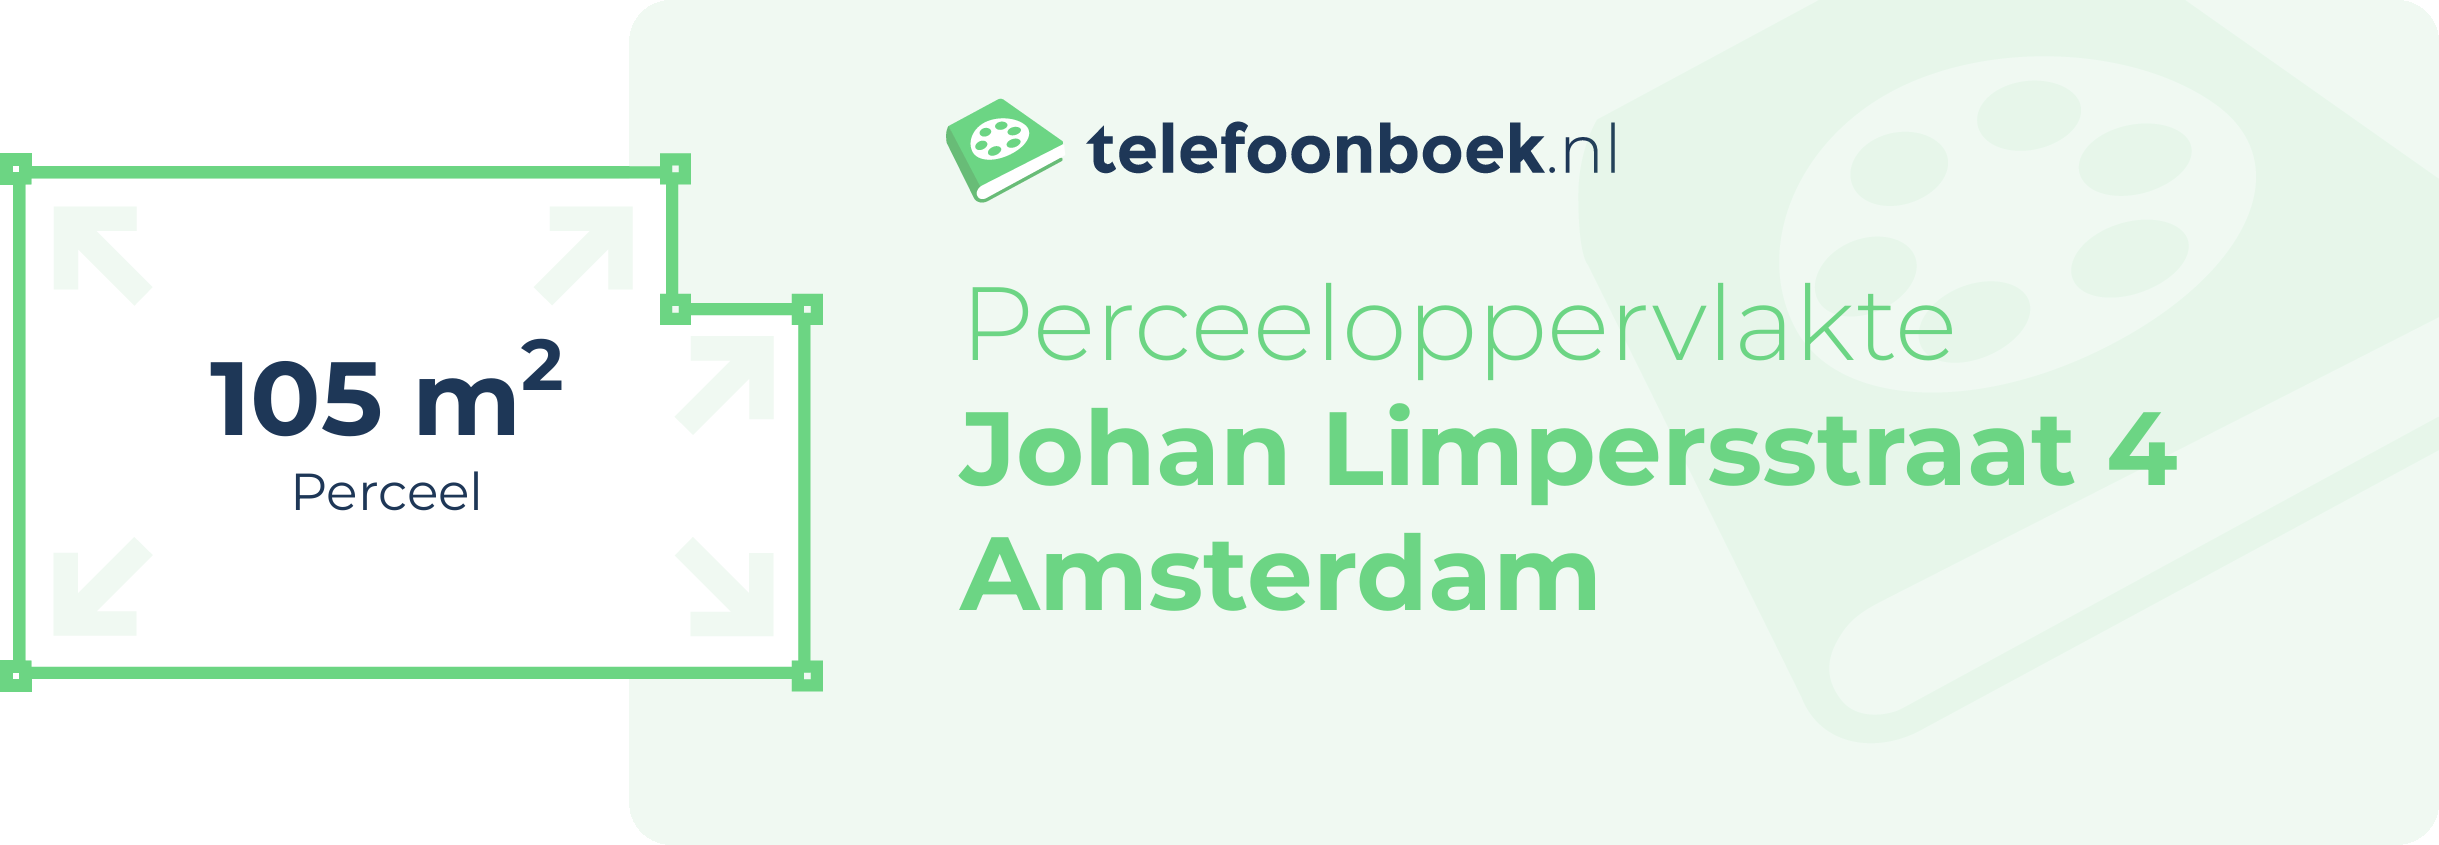 Perceeloppervlakte Johan Limpersstraat 4 Amsterdam